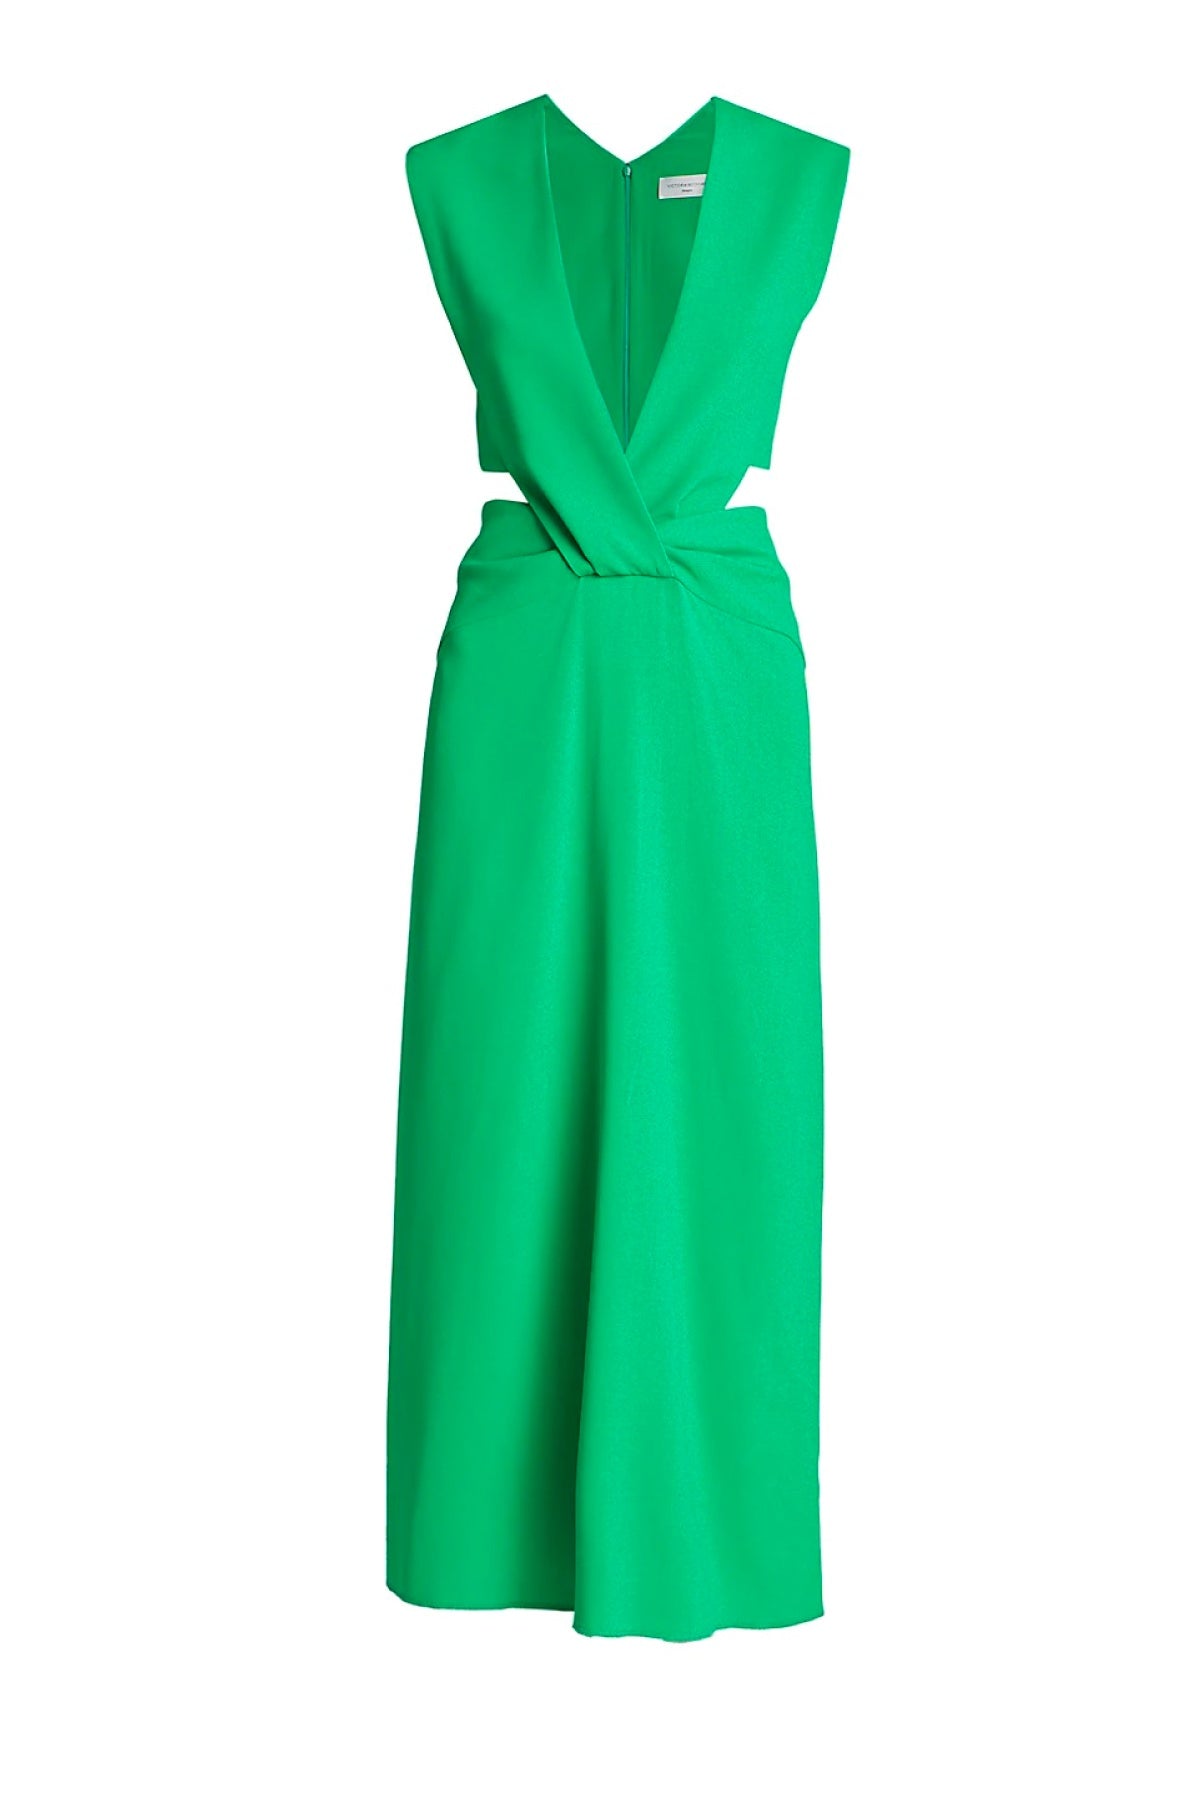 Victoria Beckham Twist Wrap Midi Dress - Bright Green